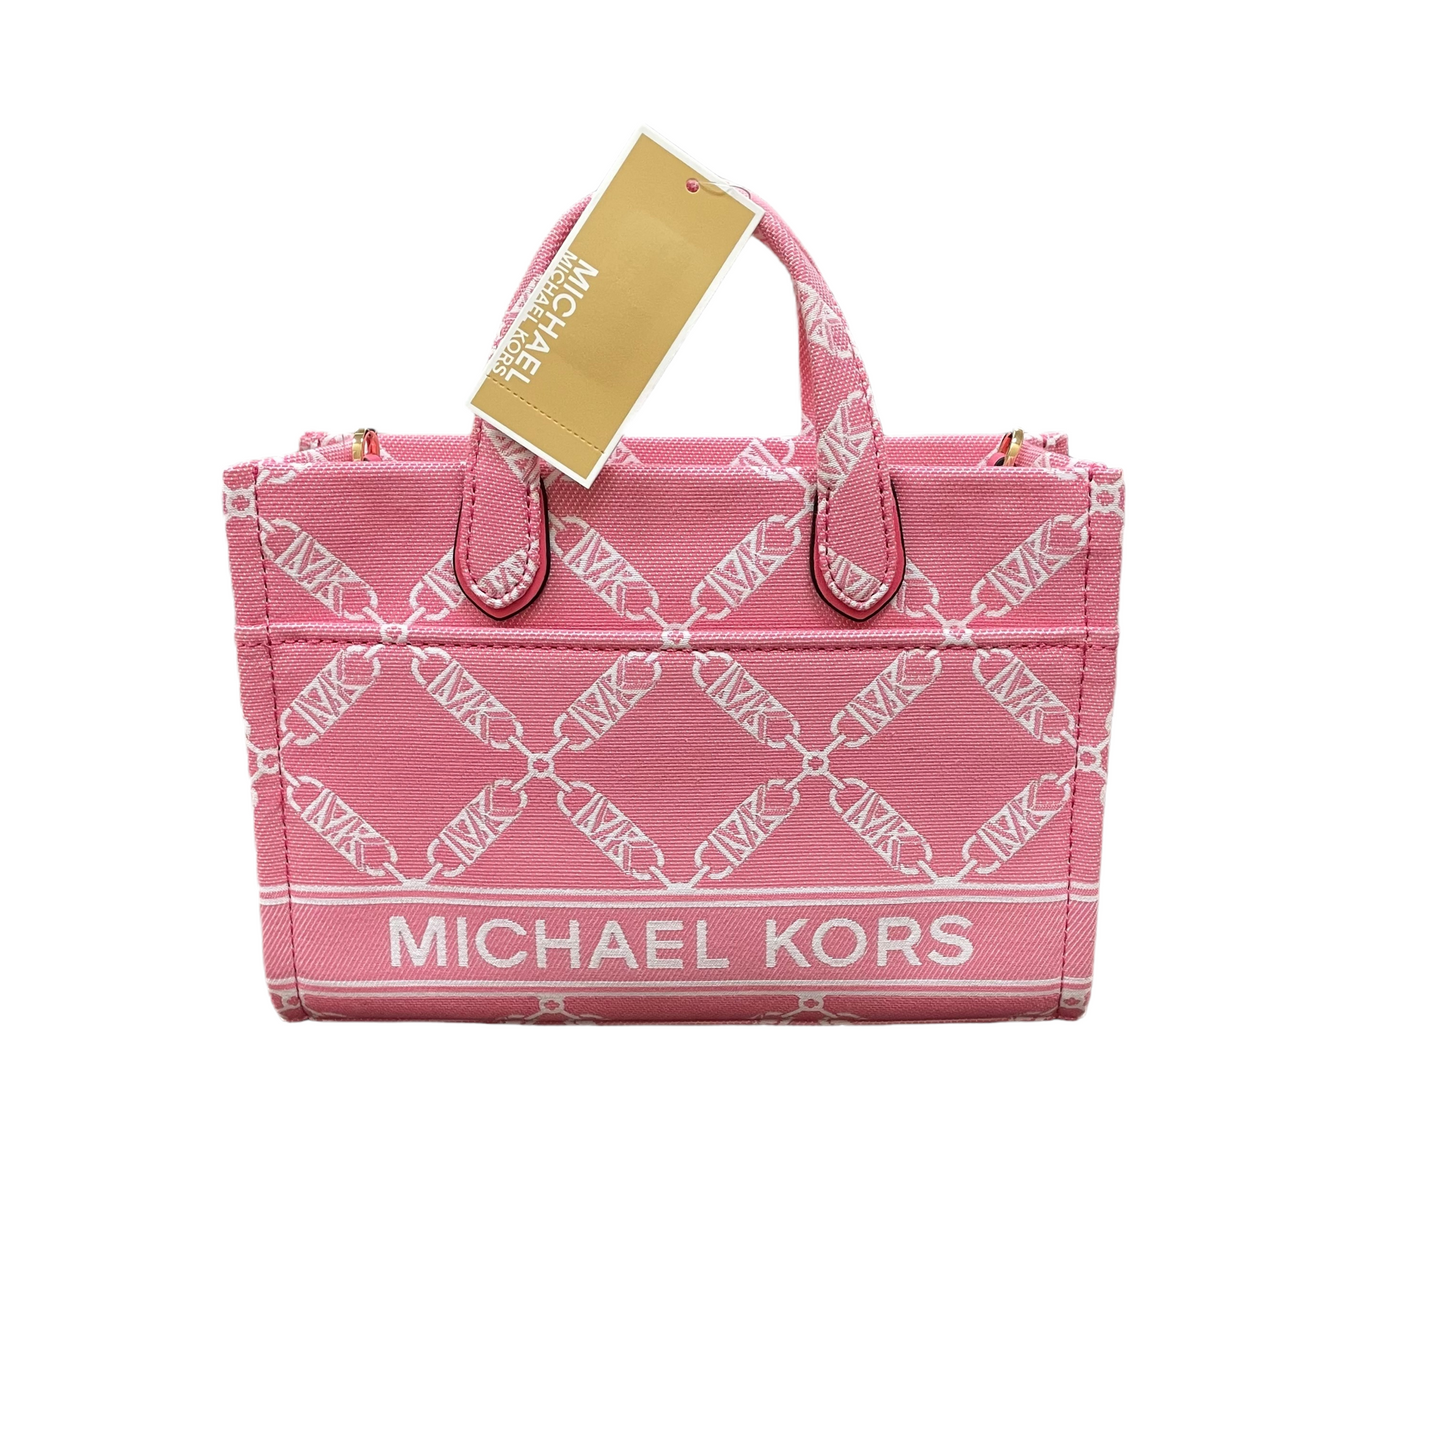 Handbag Designer By Michael Kors, Size: Small